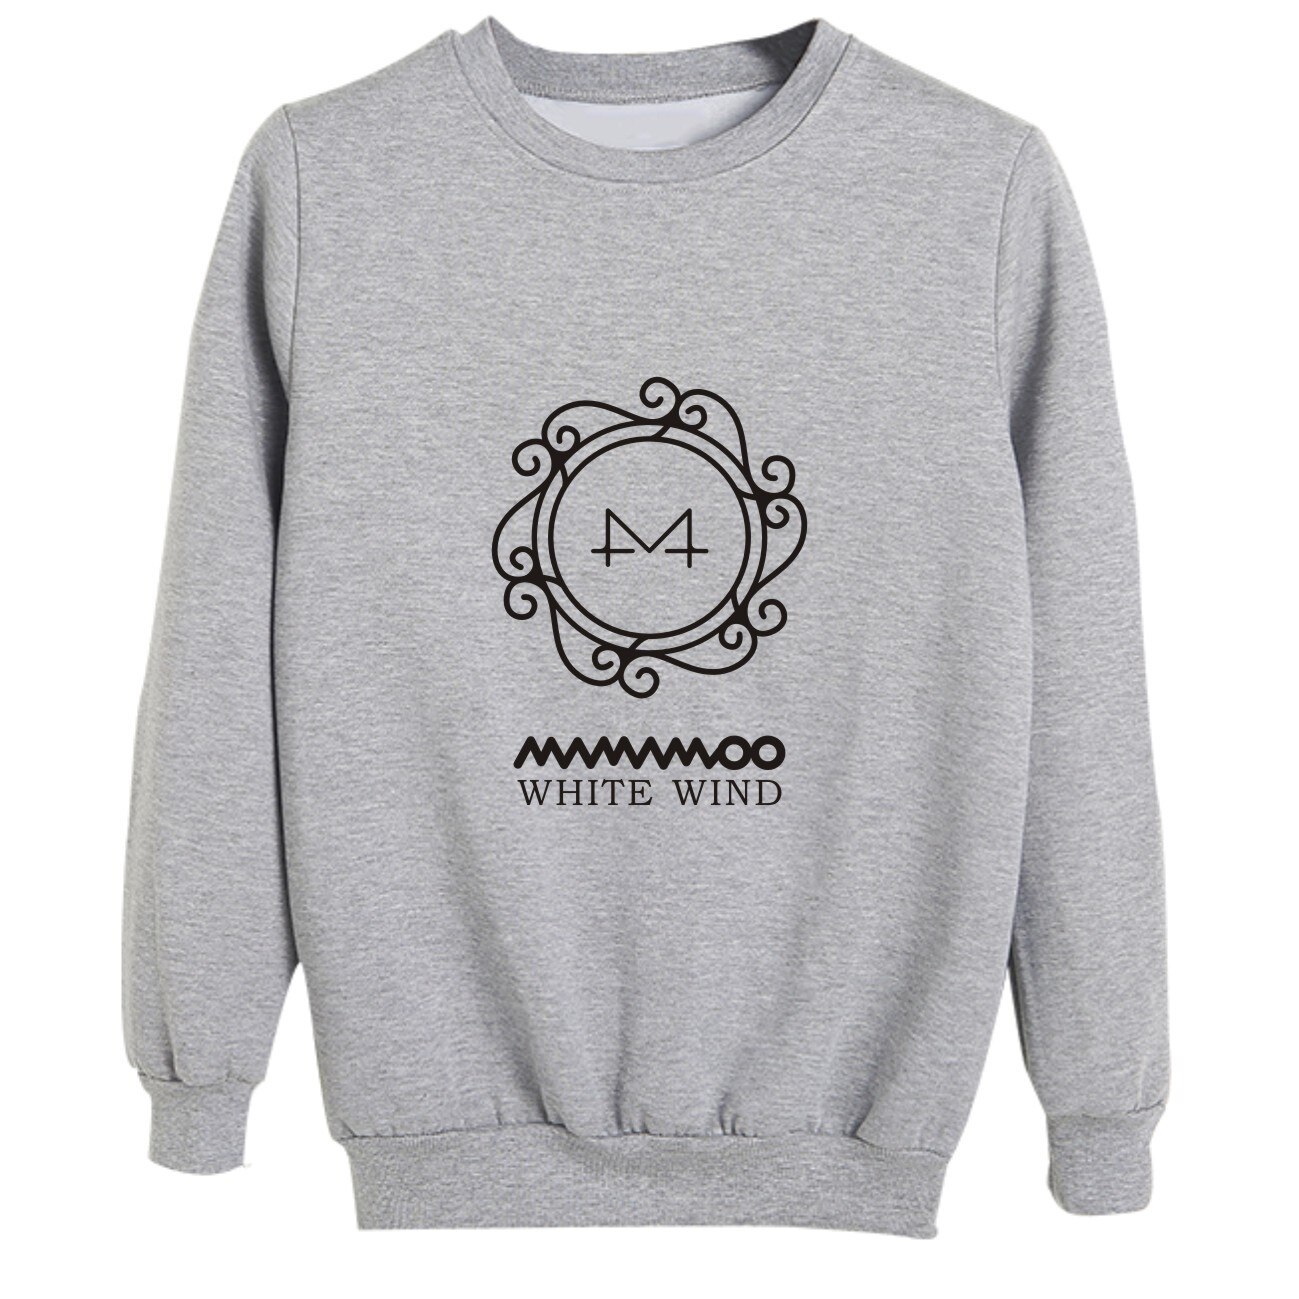 New arrival MAMAMOO pullover Sweatshirt New Album WHITE WIND Sweatshirt kpop Harajuku Hip hop Tops Coat 4 - Mamamoo Store